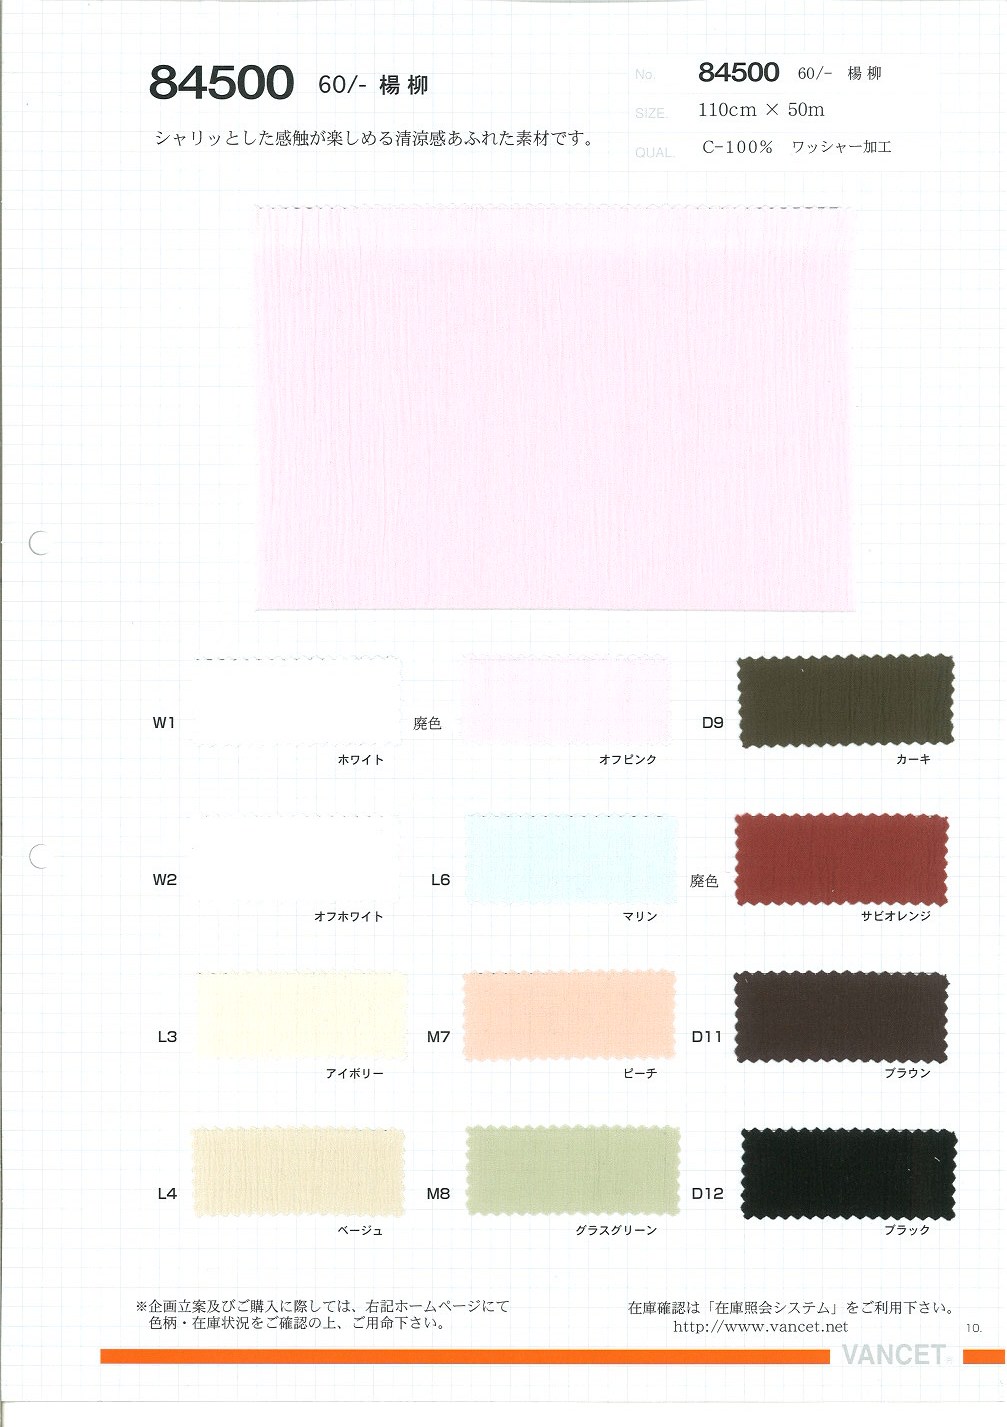 84500 60 Yoryu Hilo Simple (Crepe Arrugado)[Fabrica Textil] VANCET